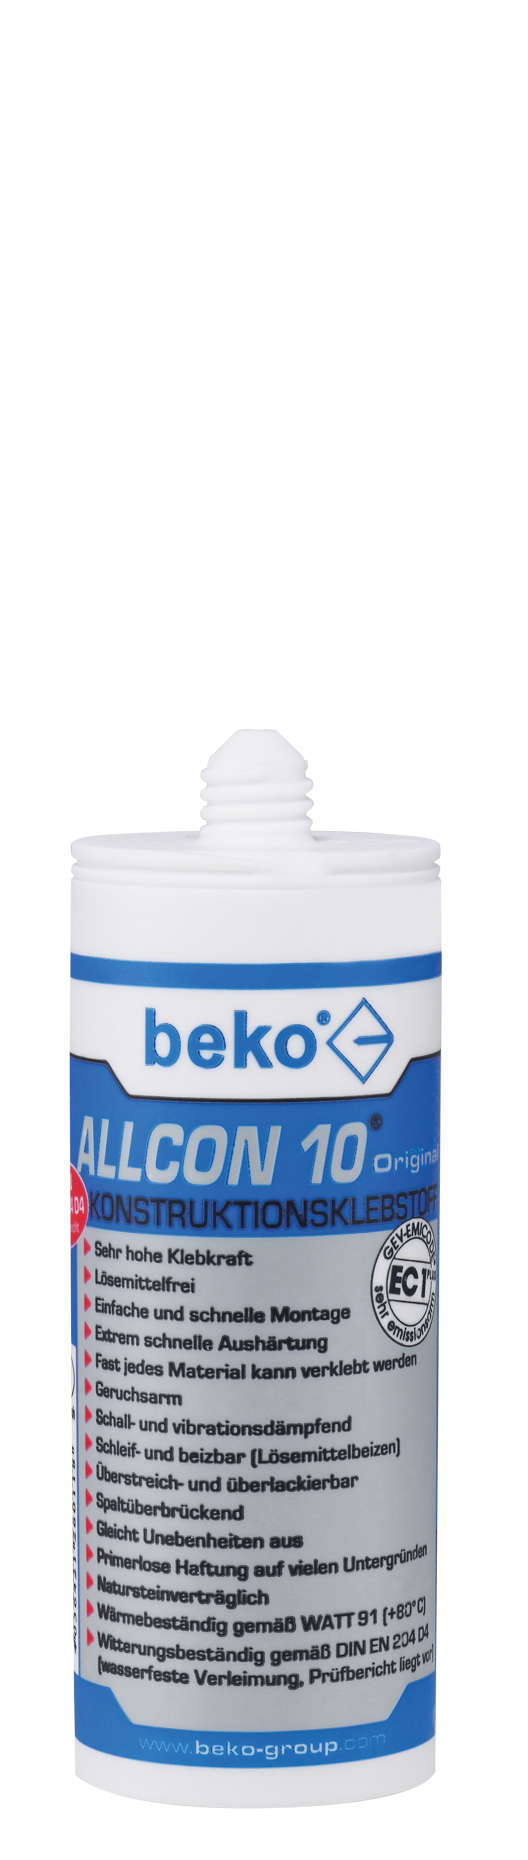 beko® Allcon 10®, Konstruktionsklebstoff, 150 ml